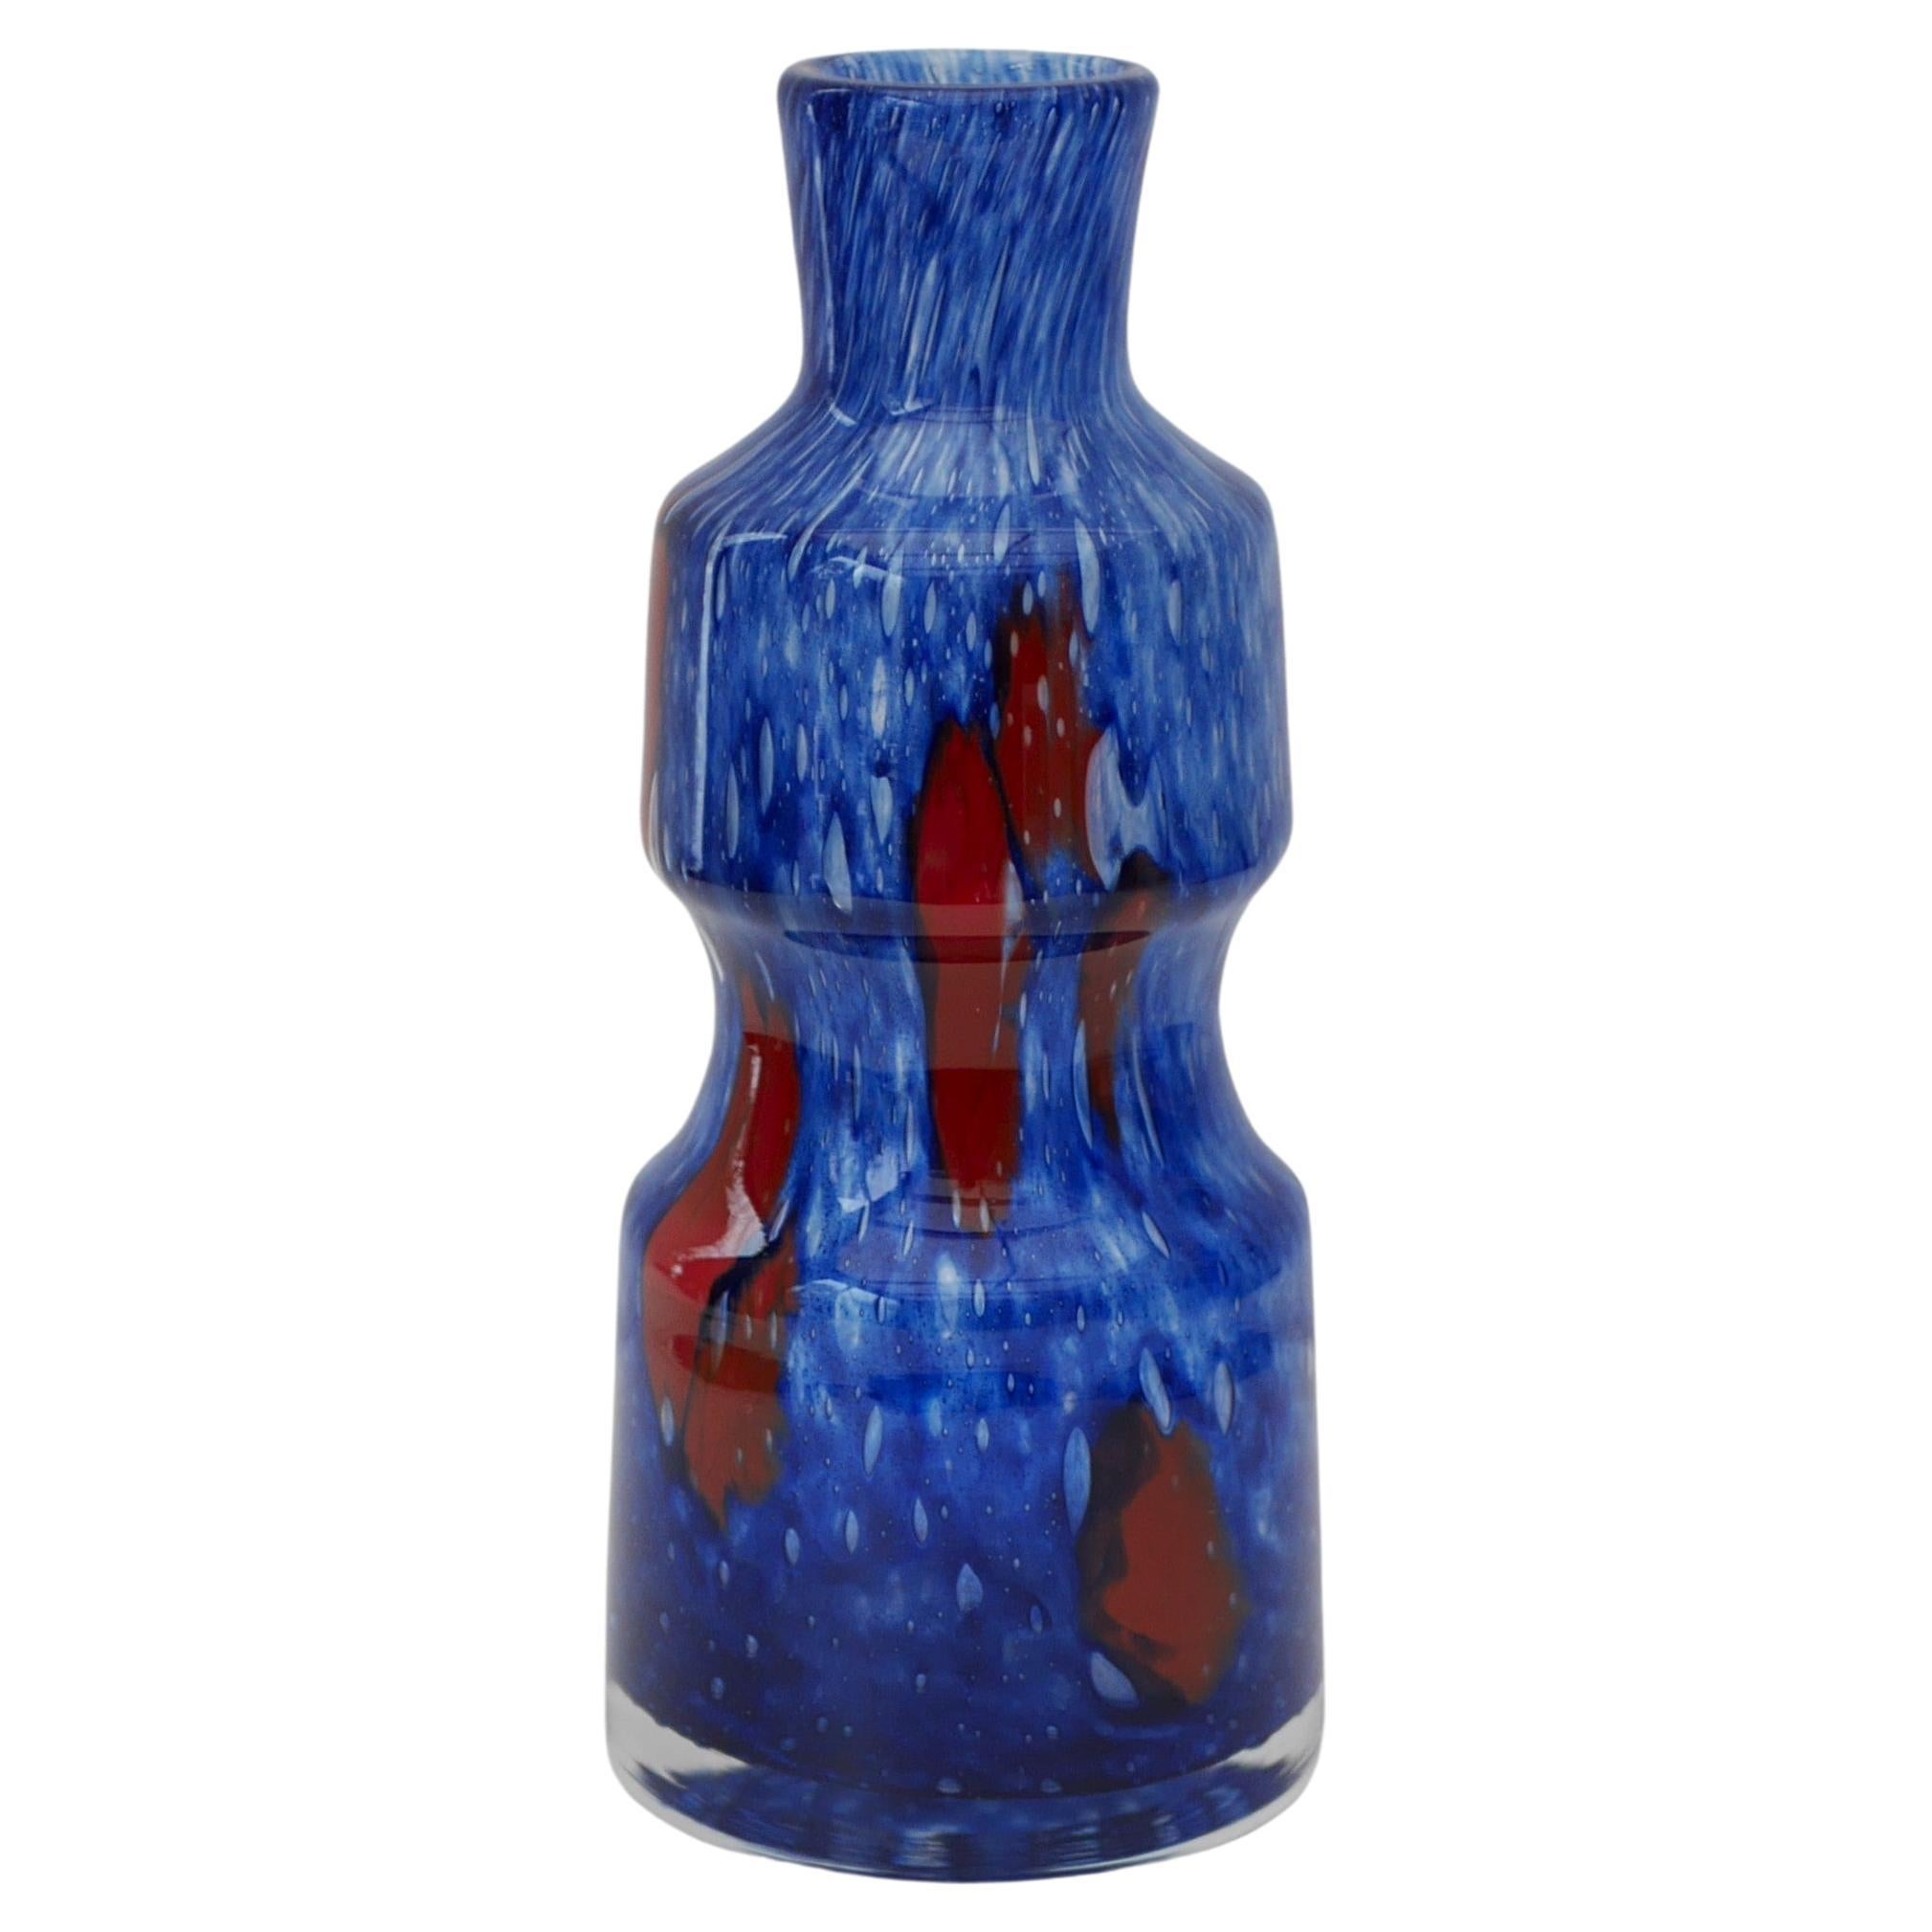 Blue Glass Art Vase from 'Prachen' Glass Works